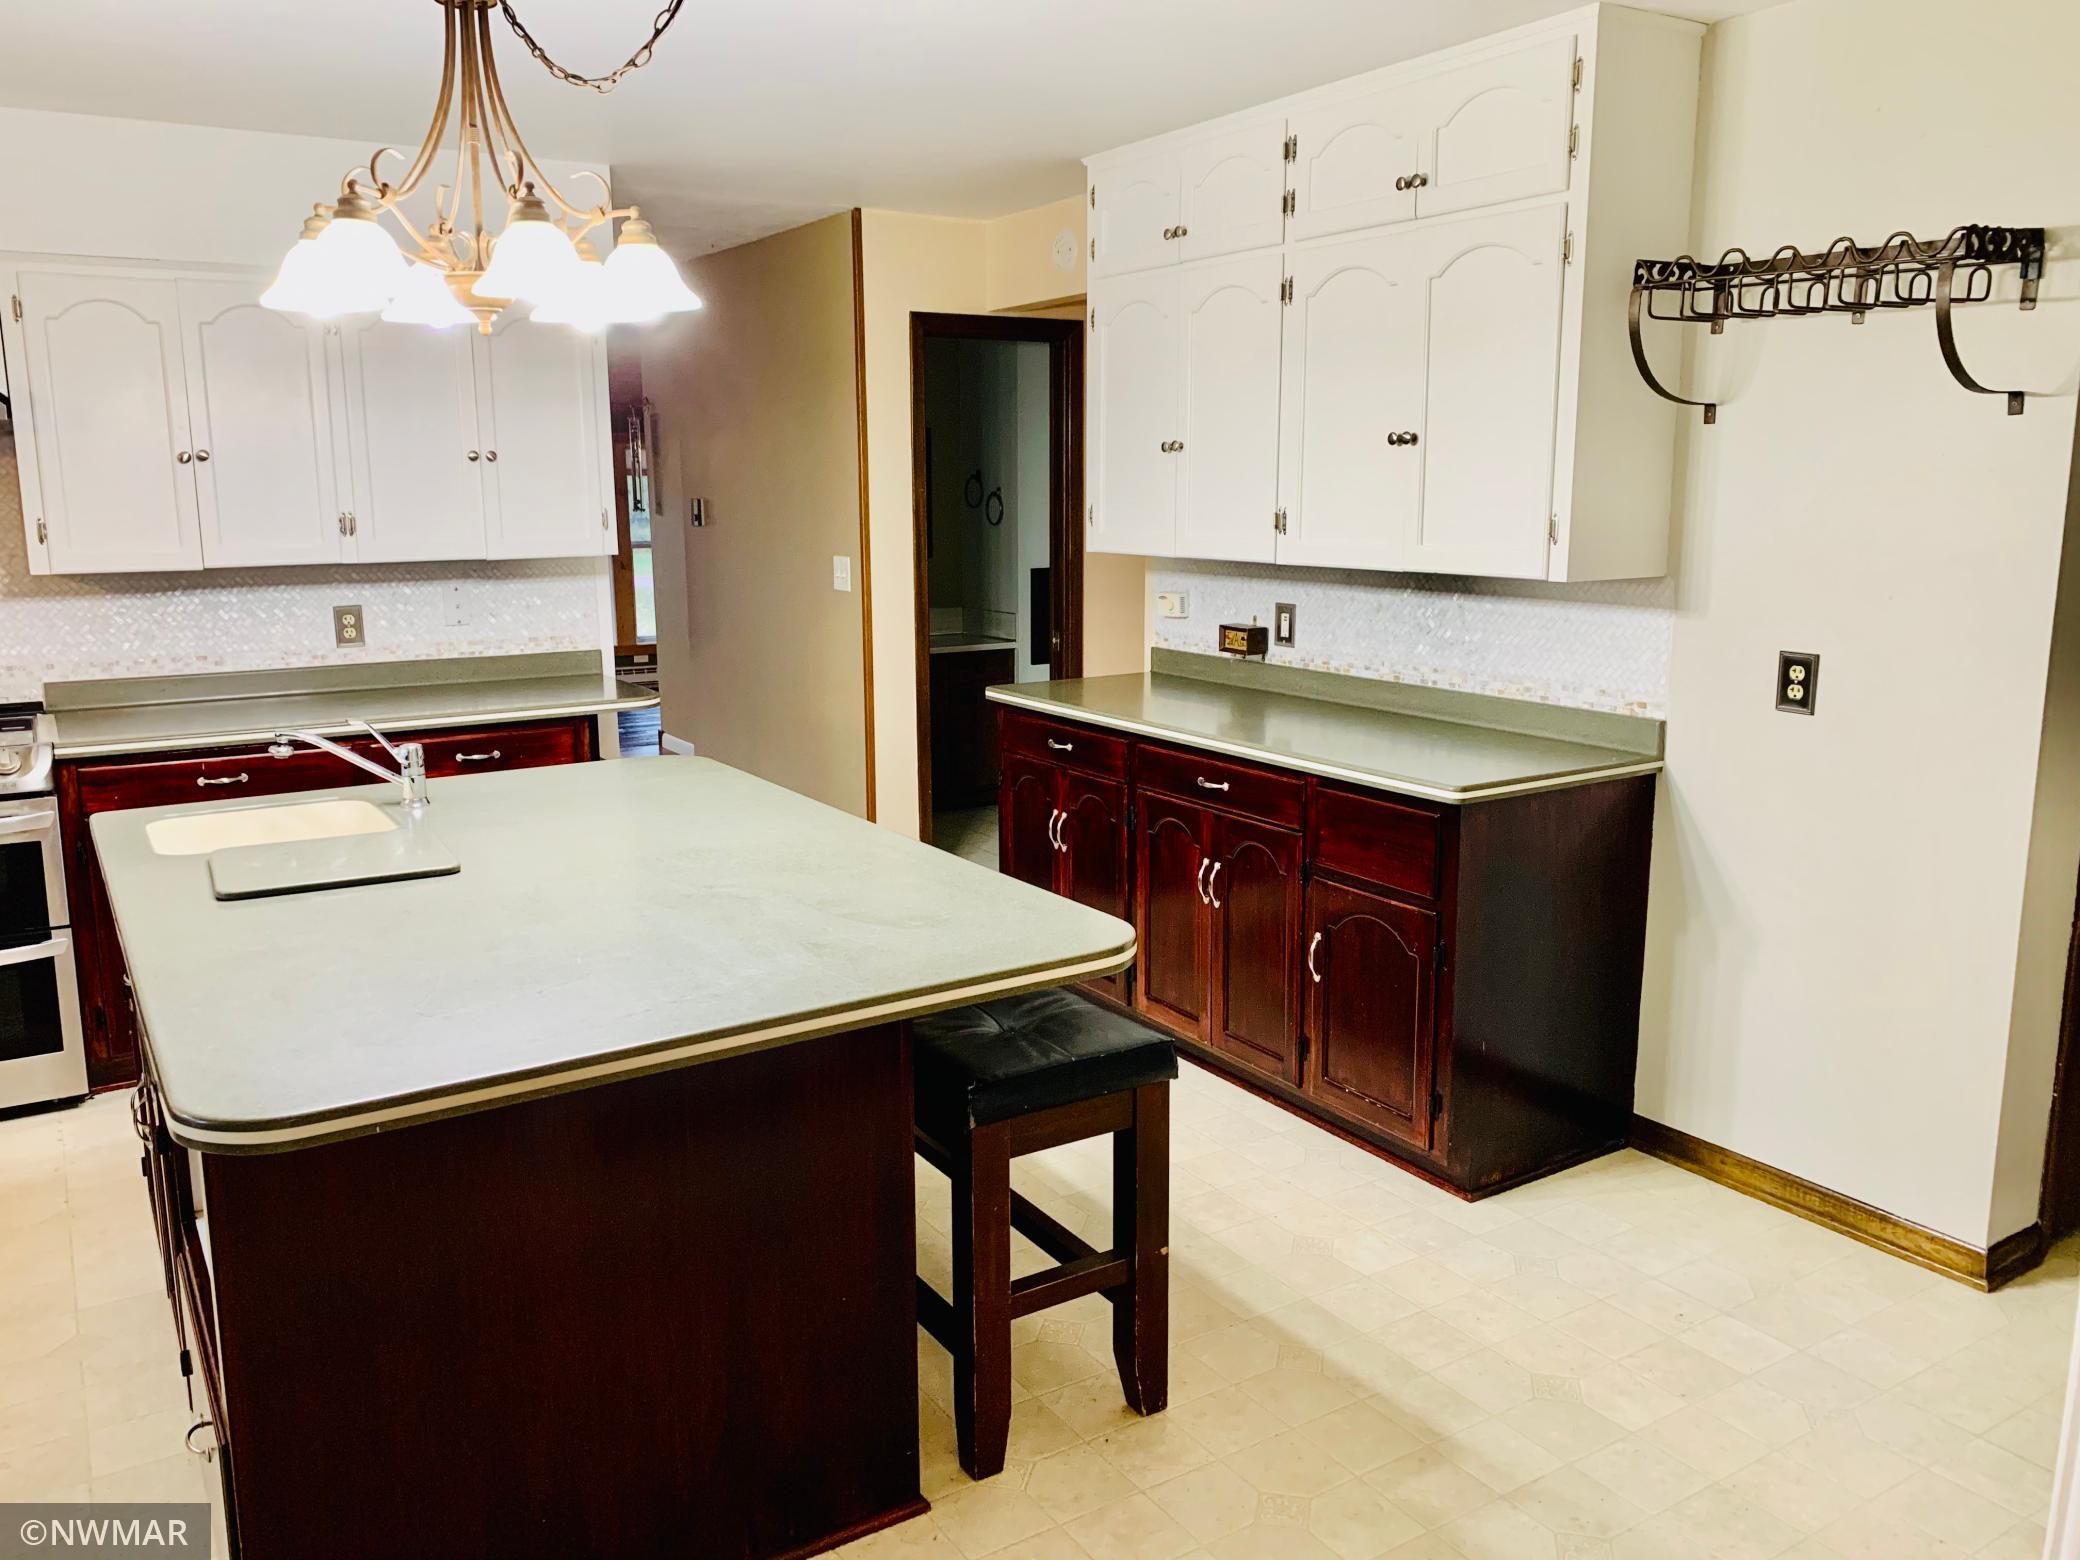 Large updated kitchen with mother of pearl tiled backsplash